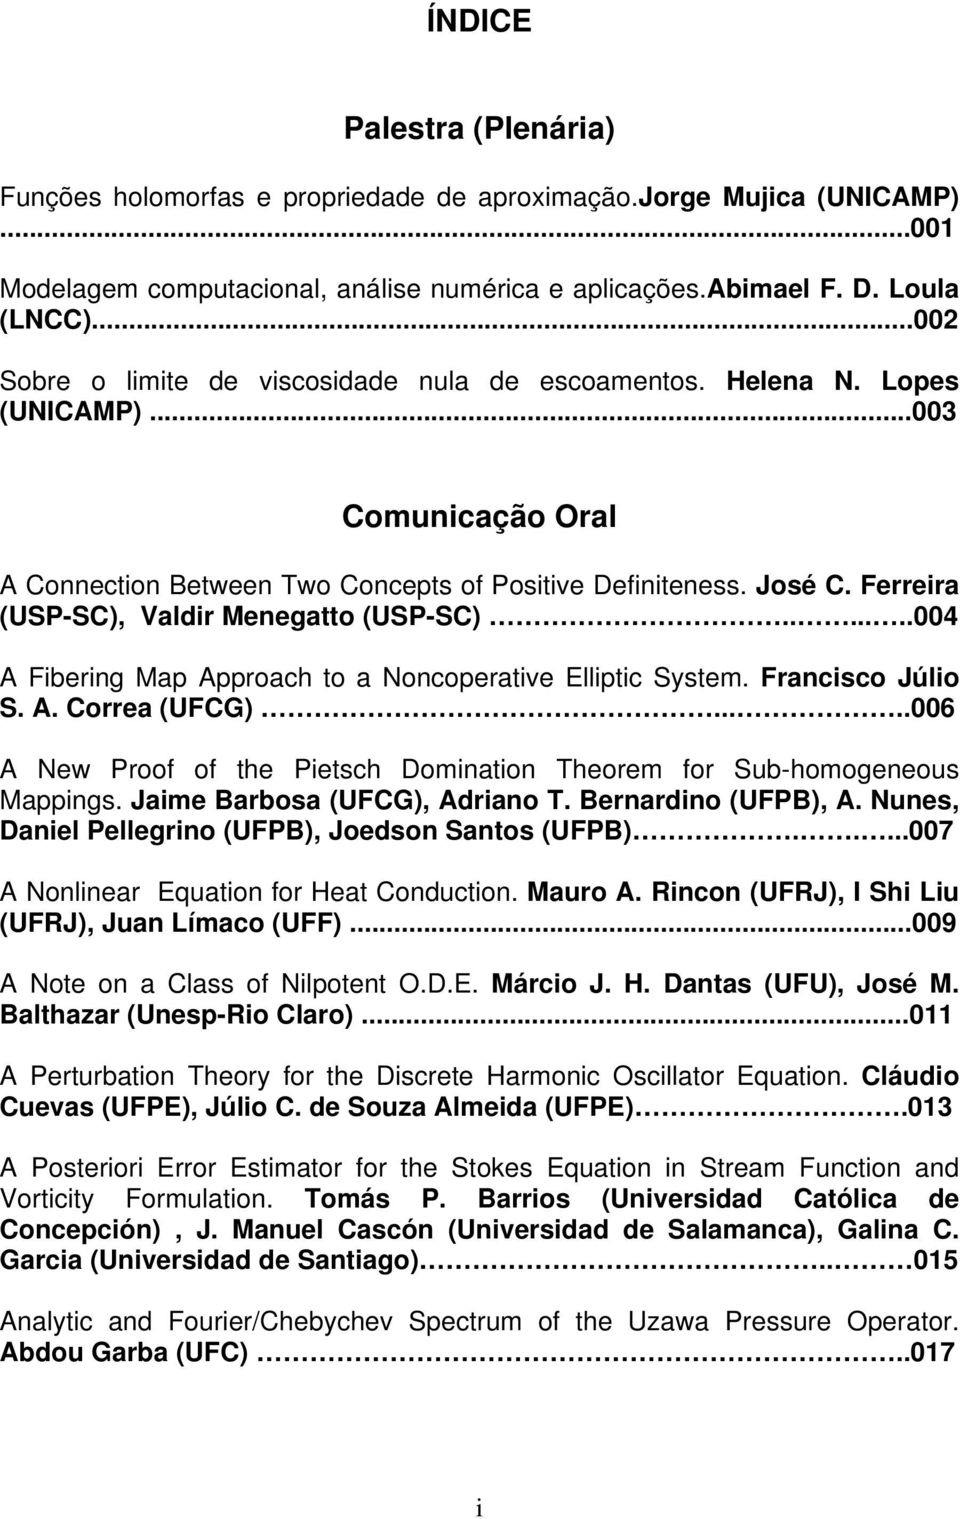 Ferreira (USP-SC), Valdir Menegatto (USP-SC).......004 A Fibering Map Approach to a Noncoperative Elliptic System. Francisco Júlio S. A. Correa (UFCG).